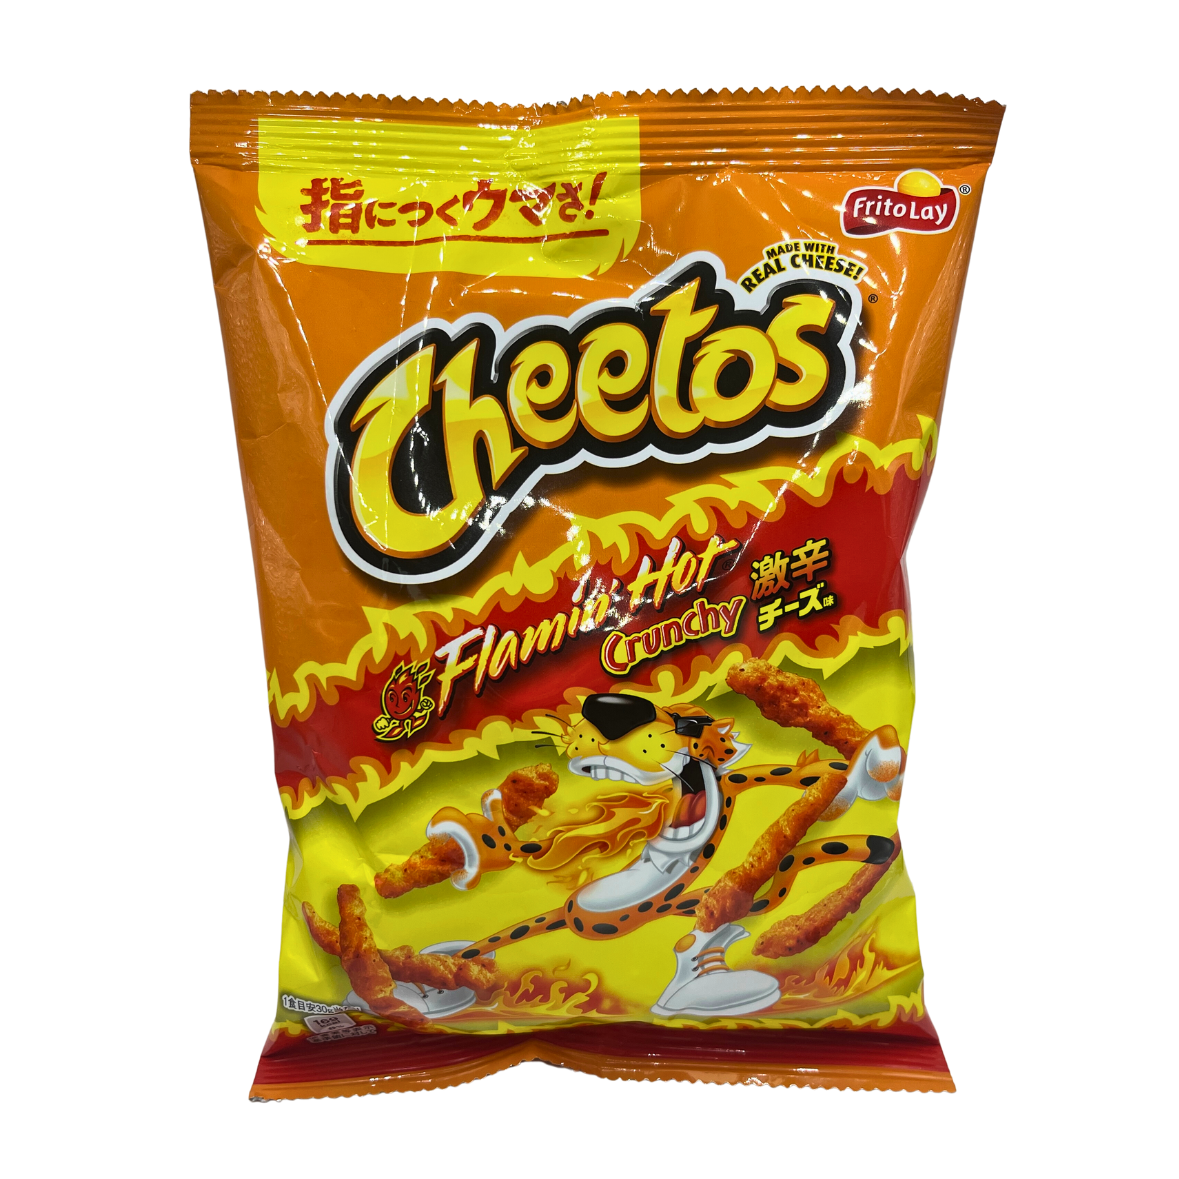 Cheetos® Crunchy Cheese Flavored Snacks, cheetos crunchy brasil 